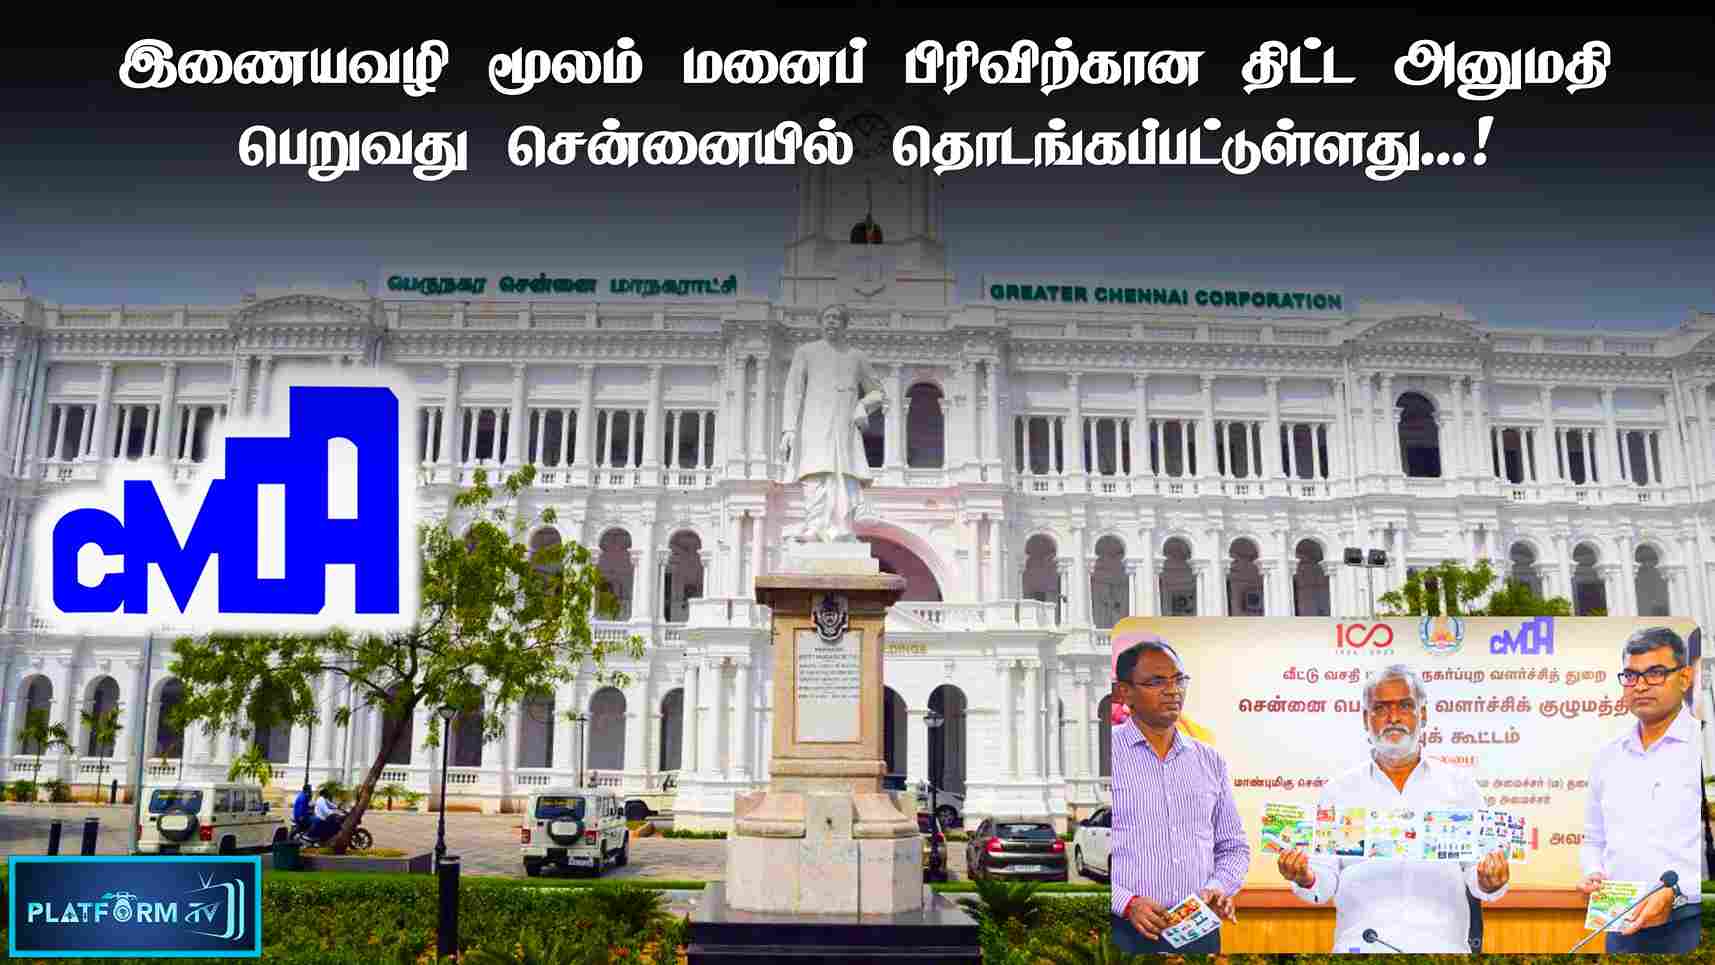 Plan Approval Through Online - Platform Tamil